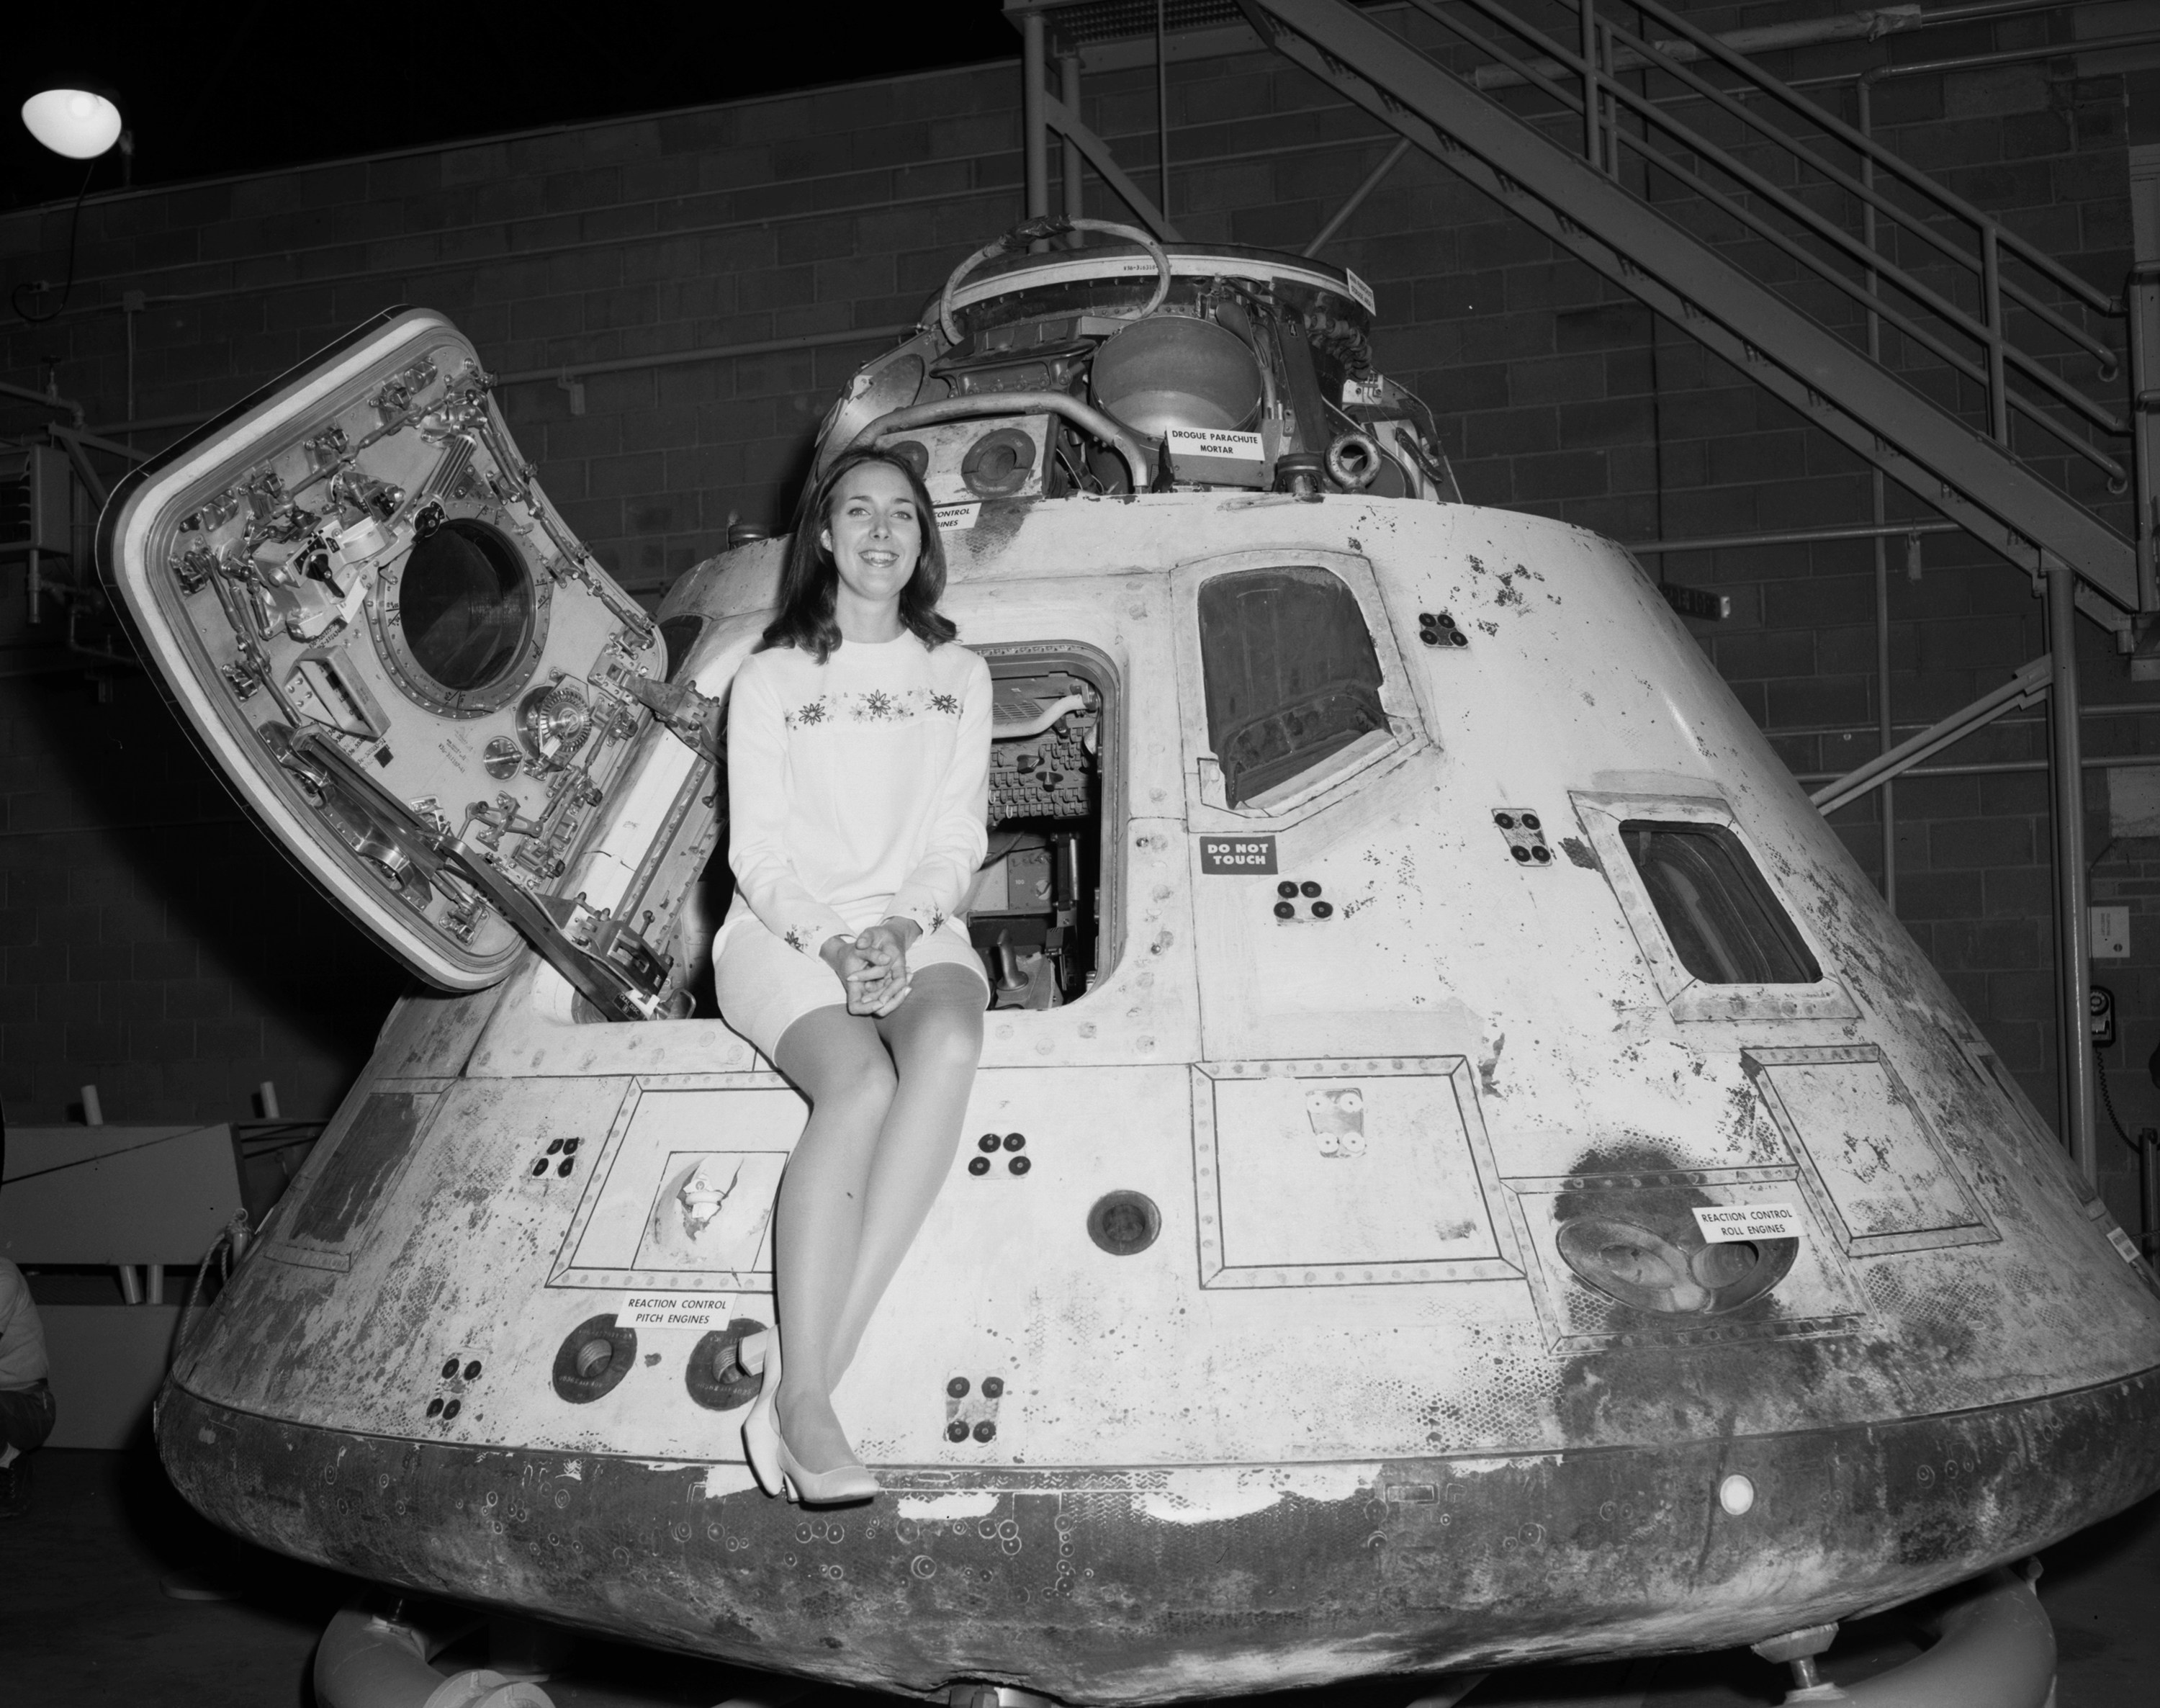 Miss NASA 1971 posing on the Apollo 8 capsule in Houston, Texas, US in 1971.jpg